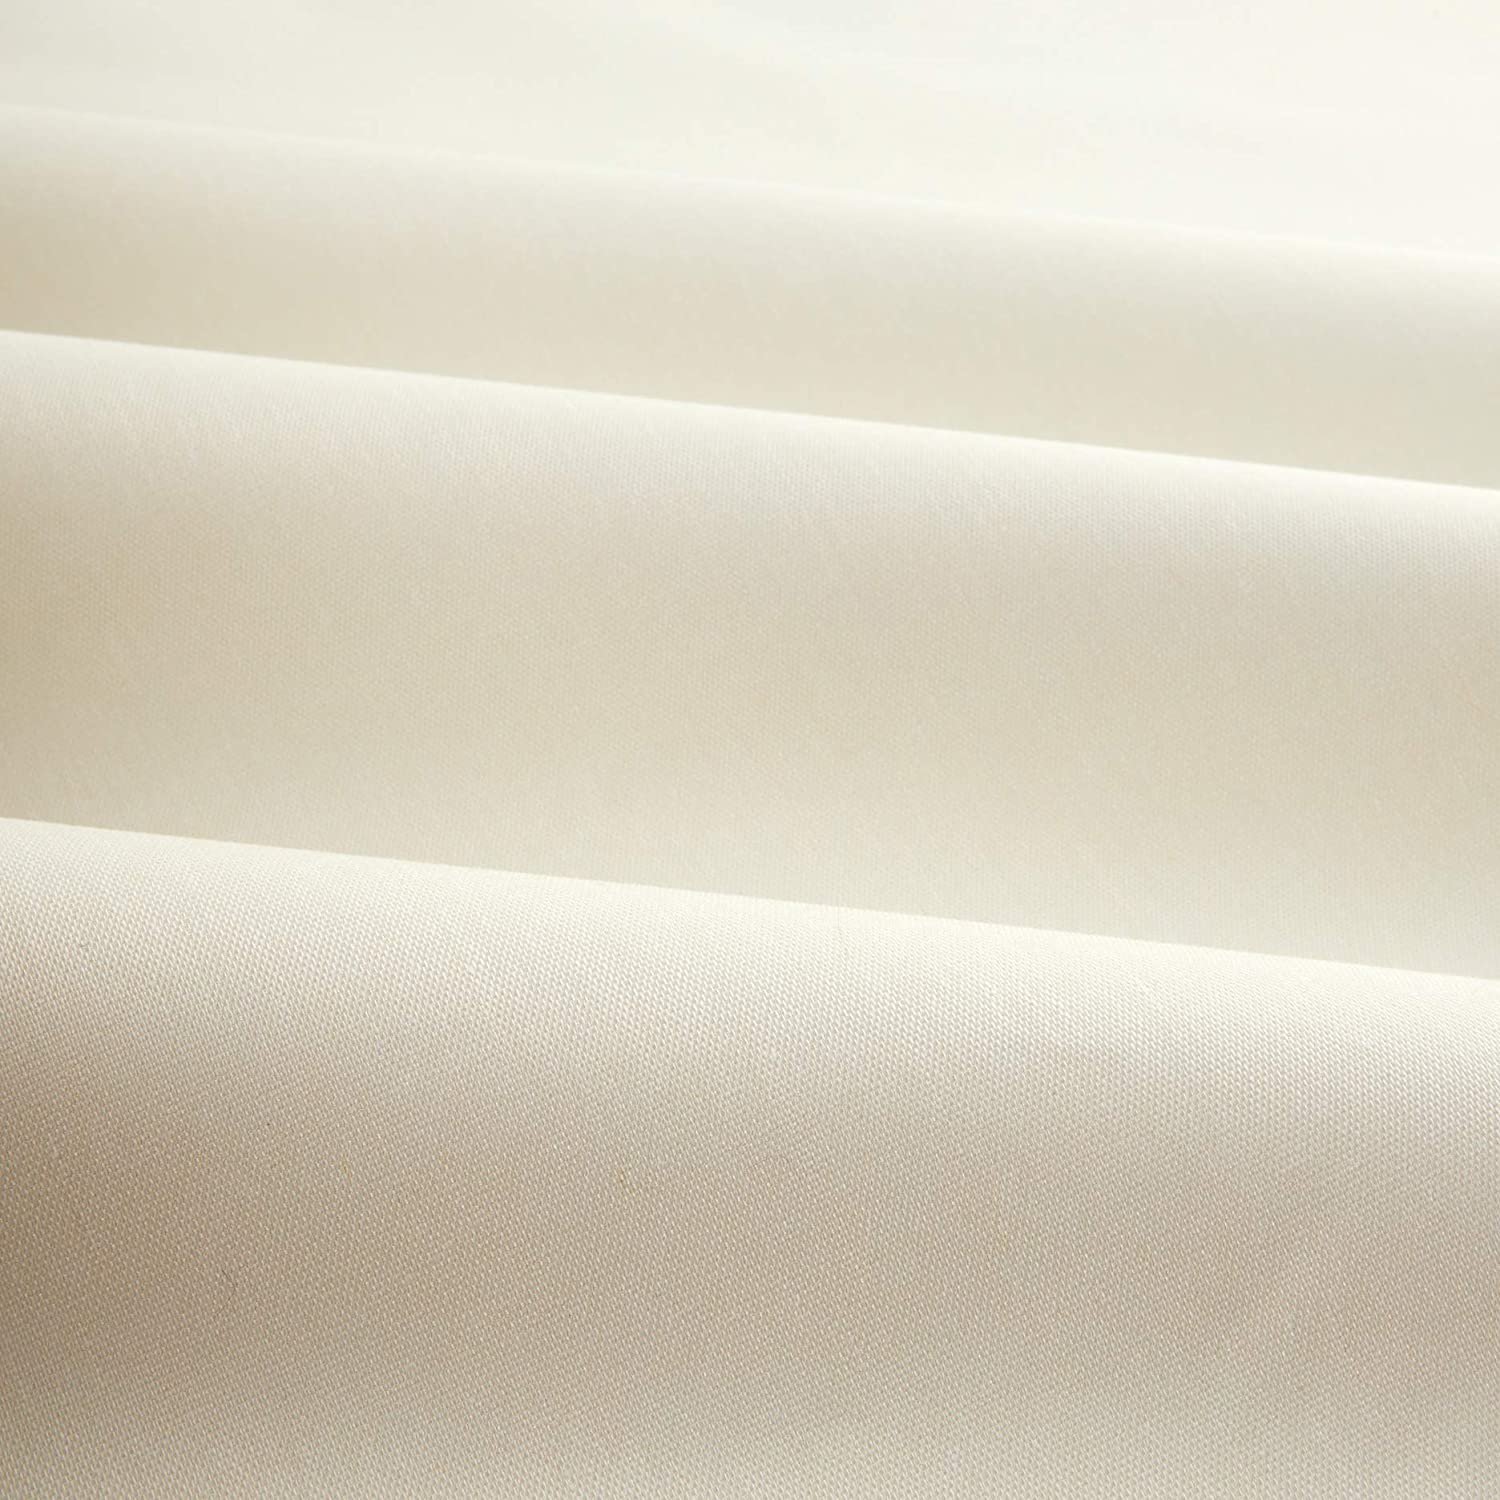 Roc-Lon Ivory Blackout Drapery Lining Fabric, 54 inch, White/Ecru - 3 Yard  Cut